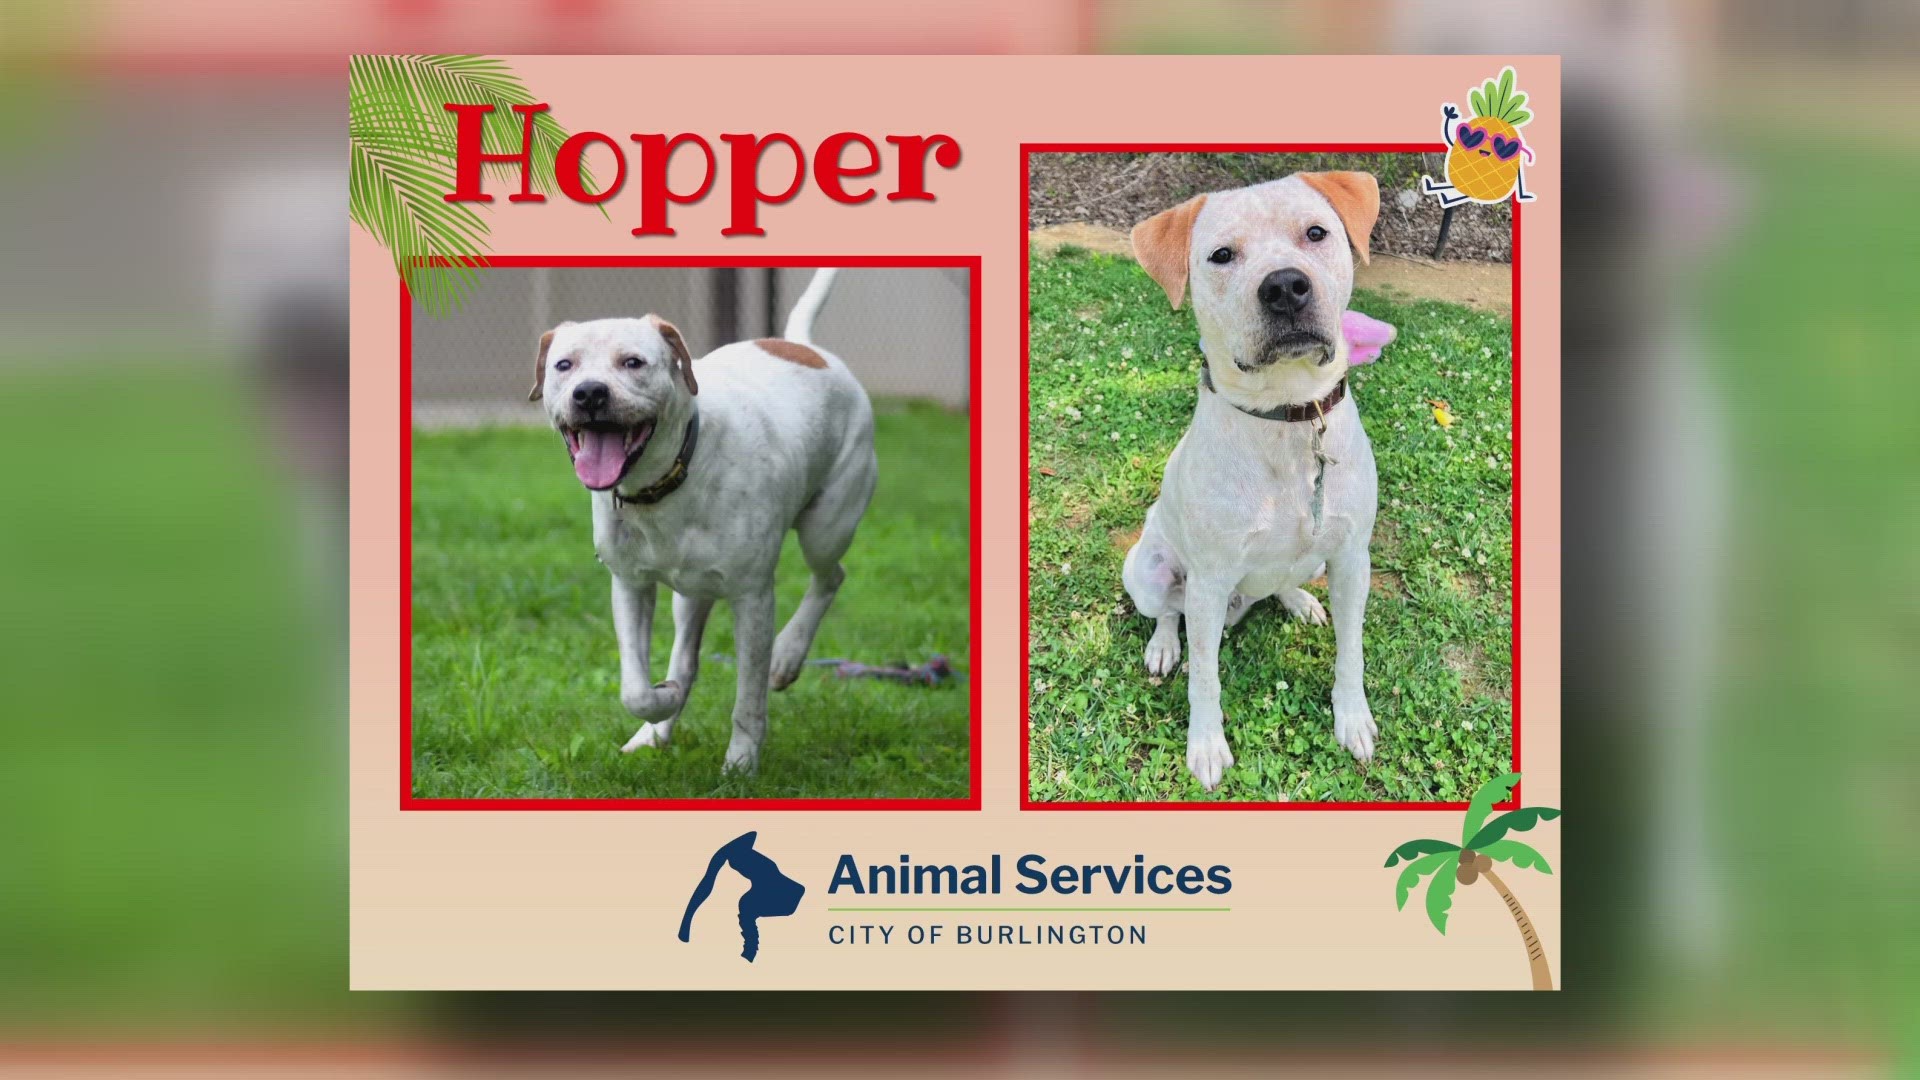 Let's get Hopper adopted!